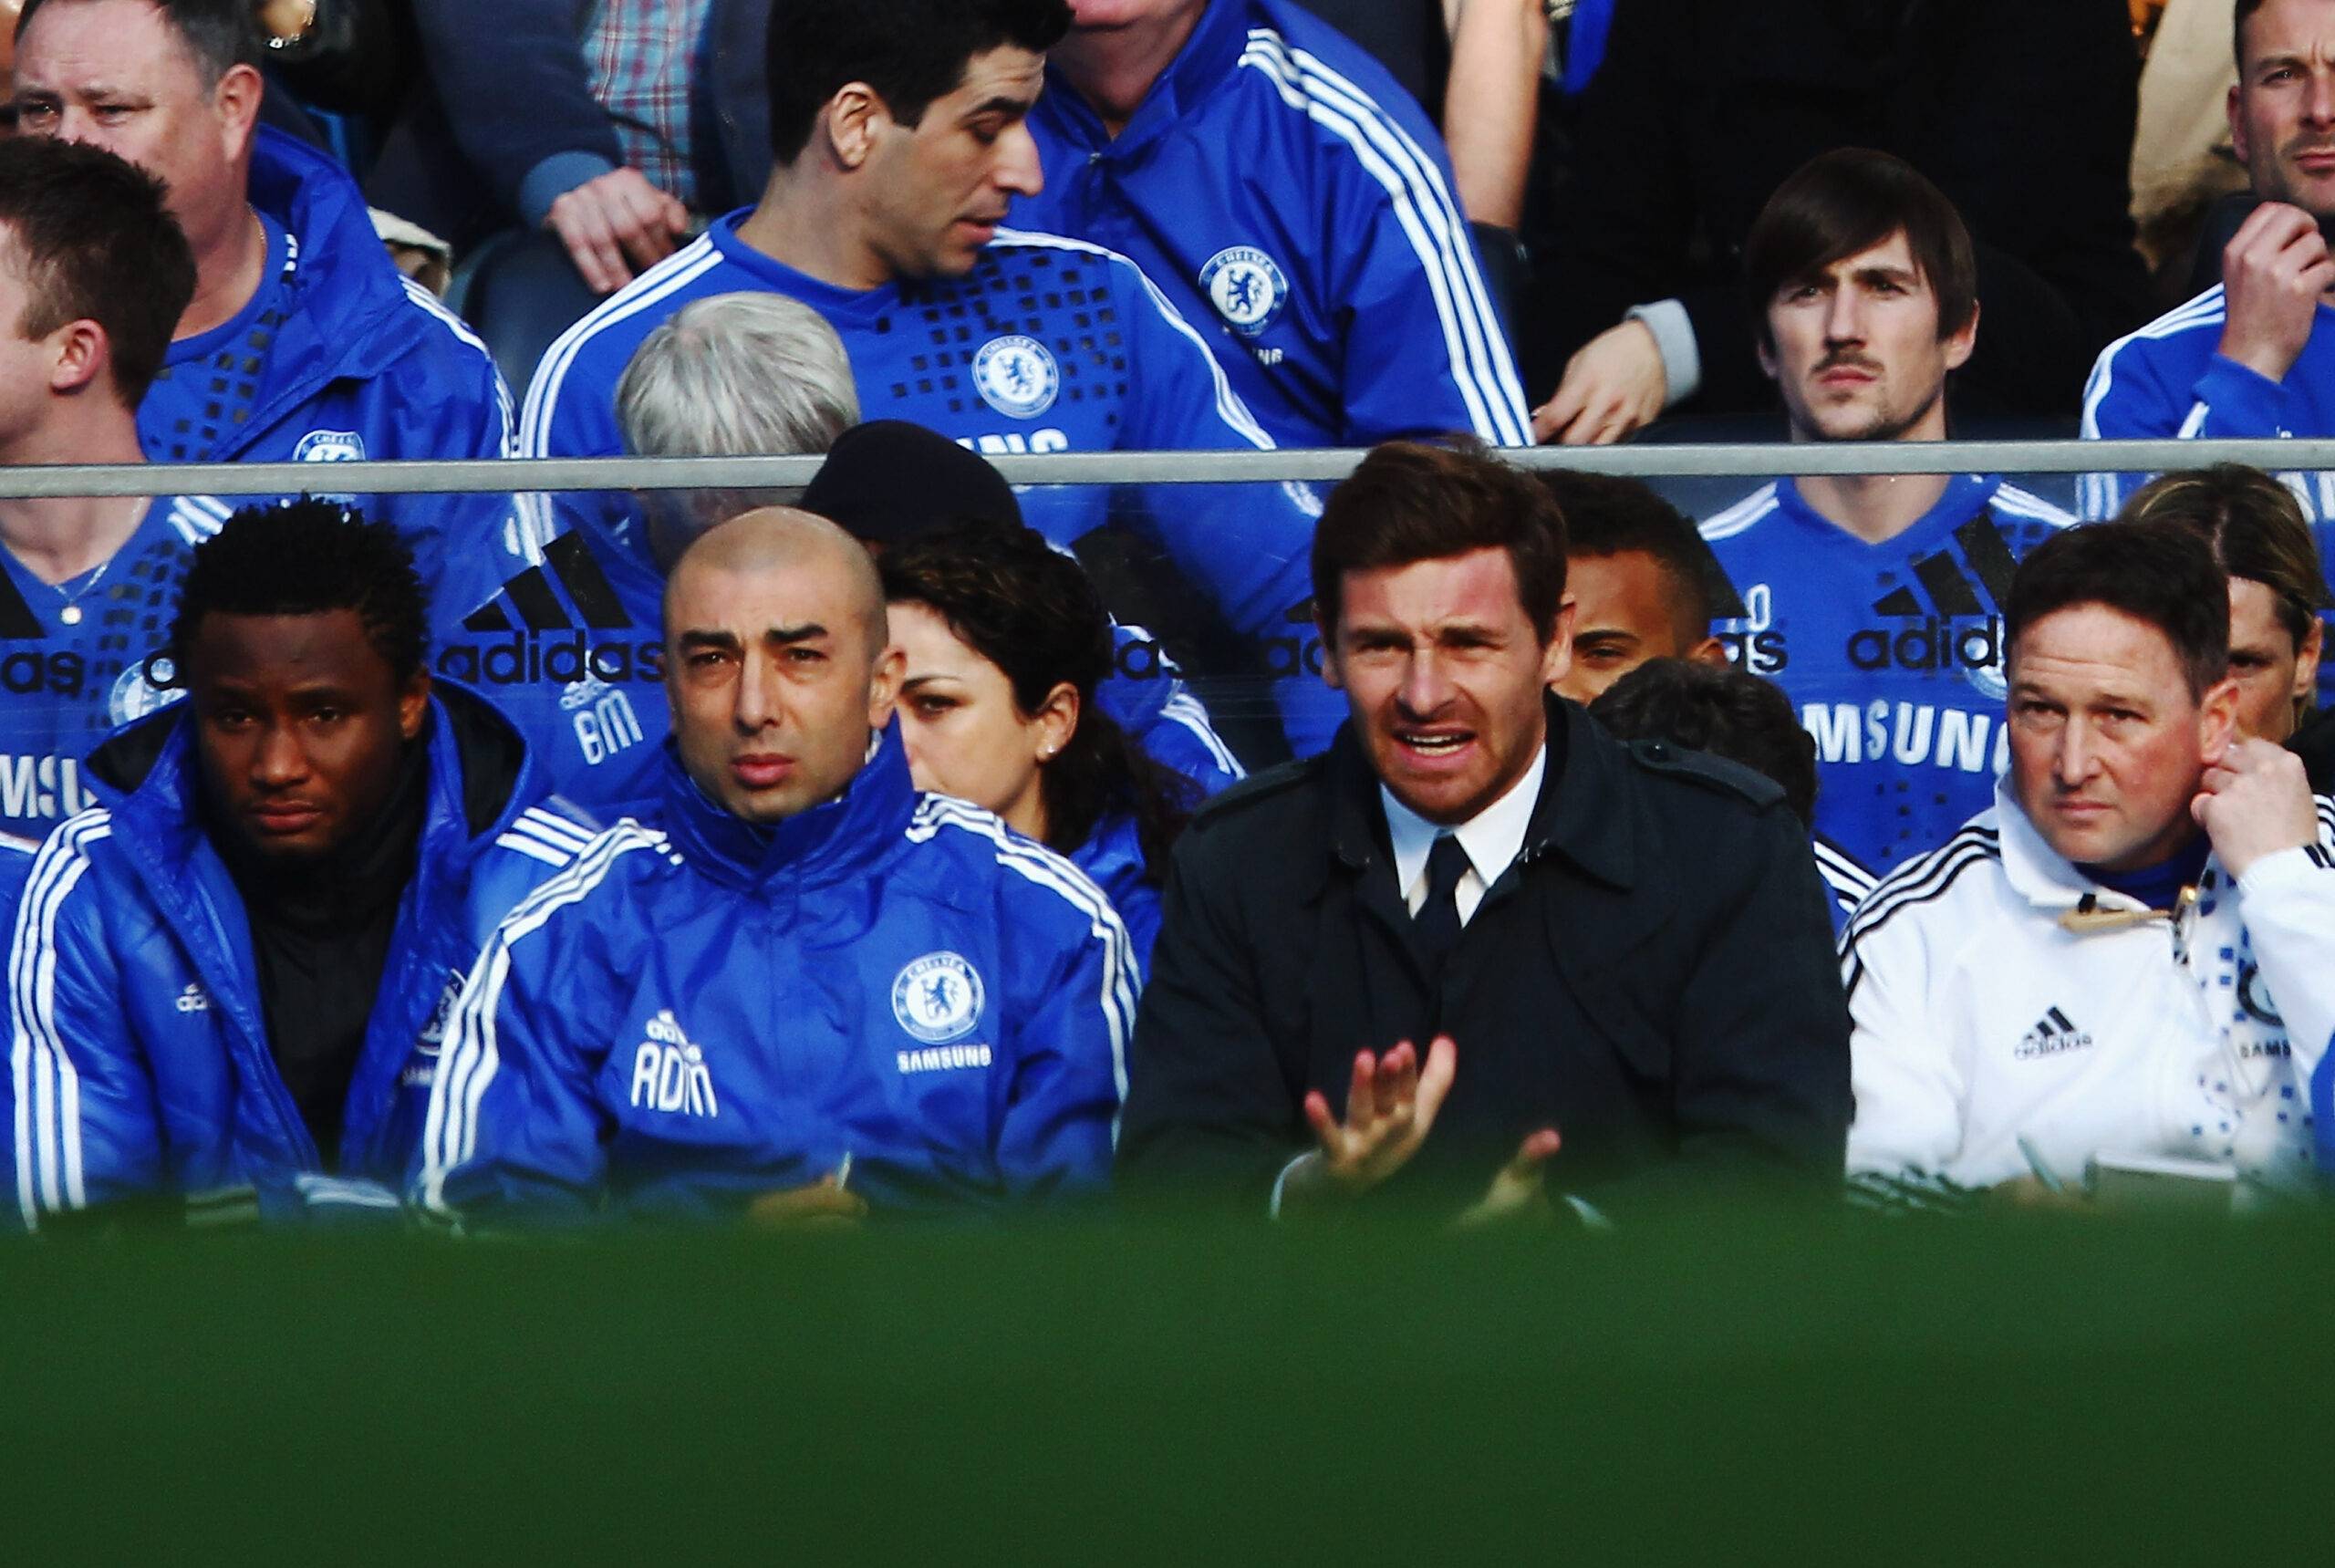 Villas-Boas clapping in the Chelsea dugout.